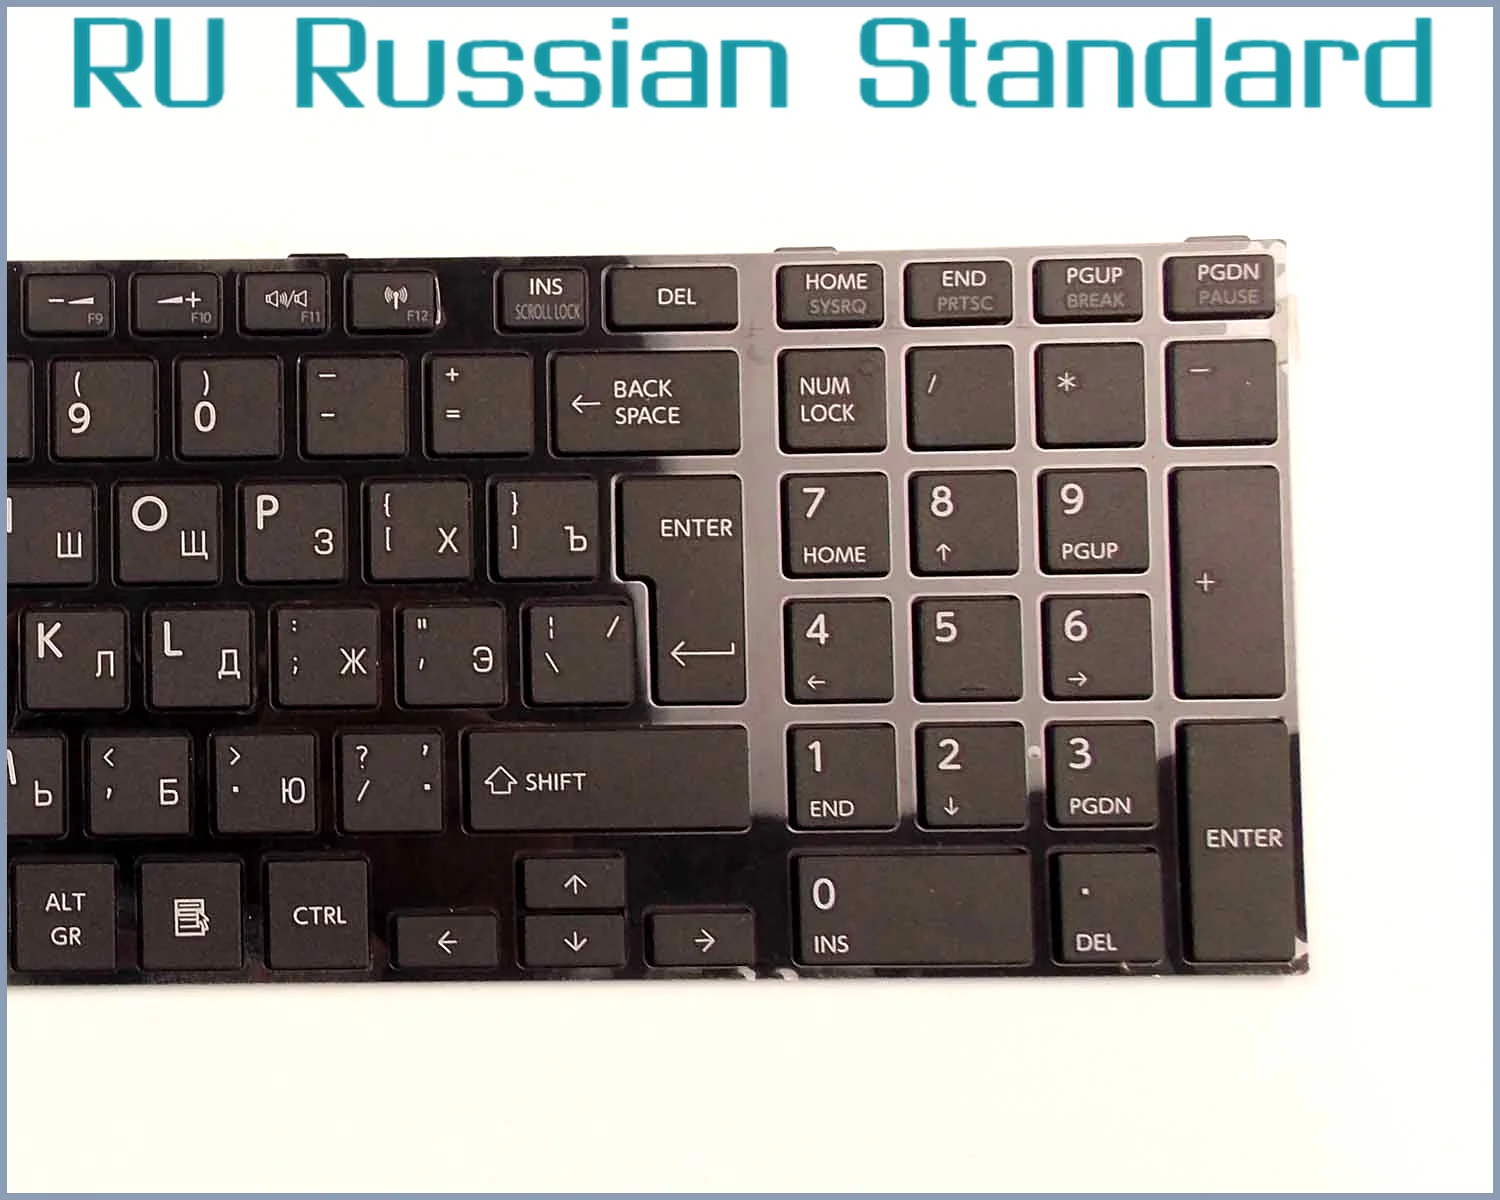 

Russian RU Keyboard for Toshiba Satellite C855 C855D S850 S855 S870 S850D S855D S870D S875D L850 C850 L875D Laptop